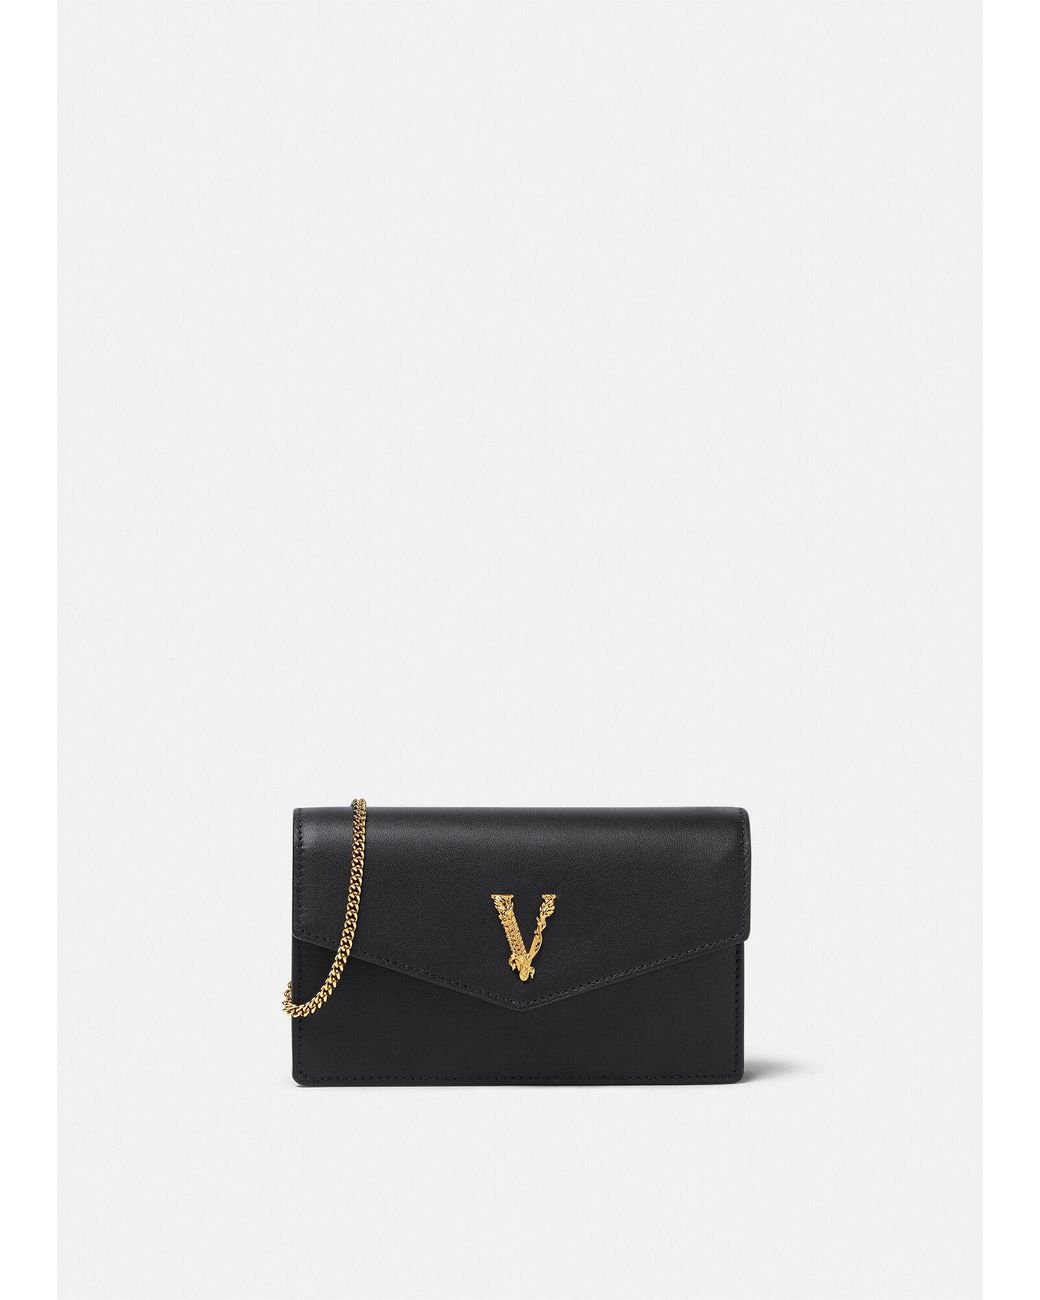 Versace Virtus Envelope Clutch in White | Lyst